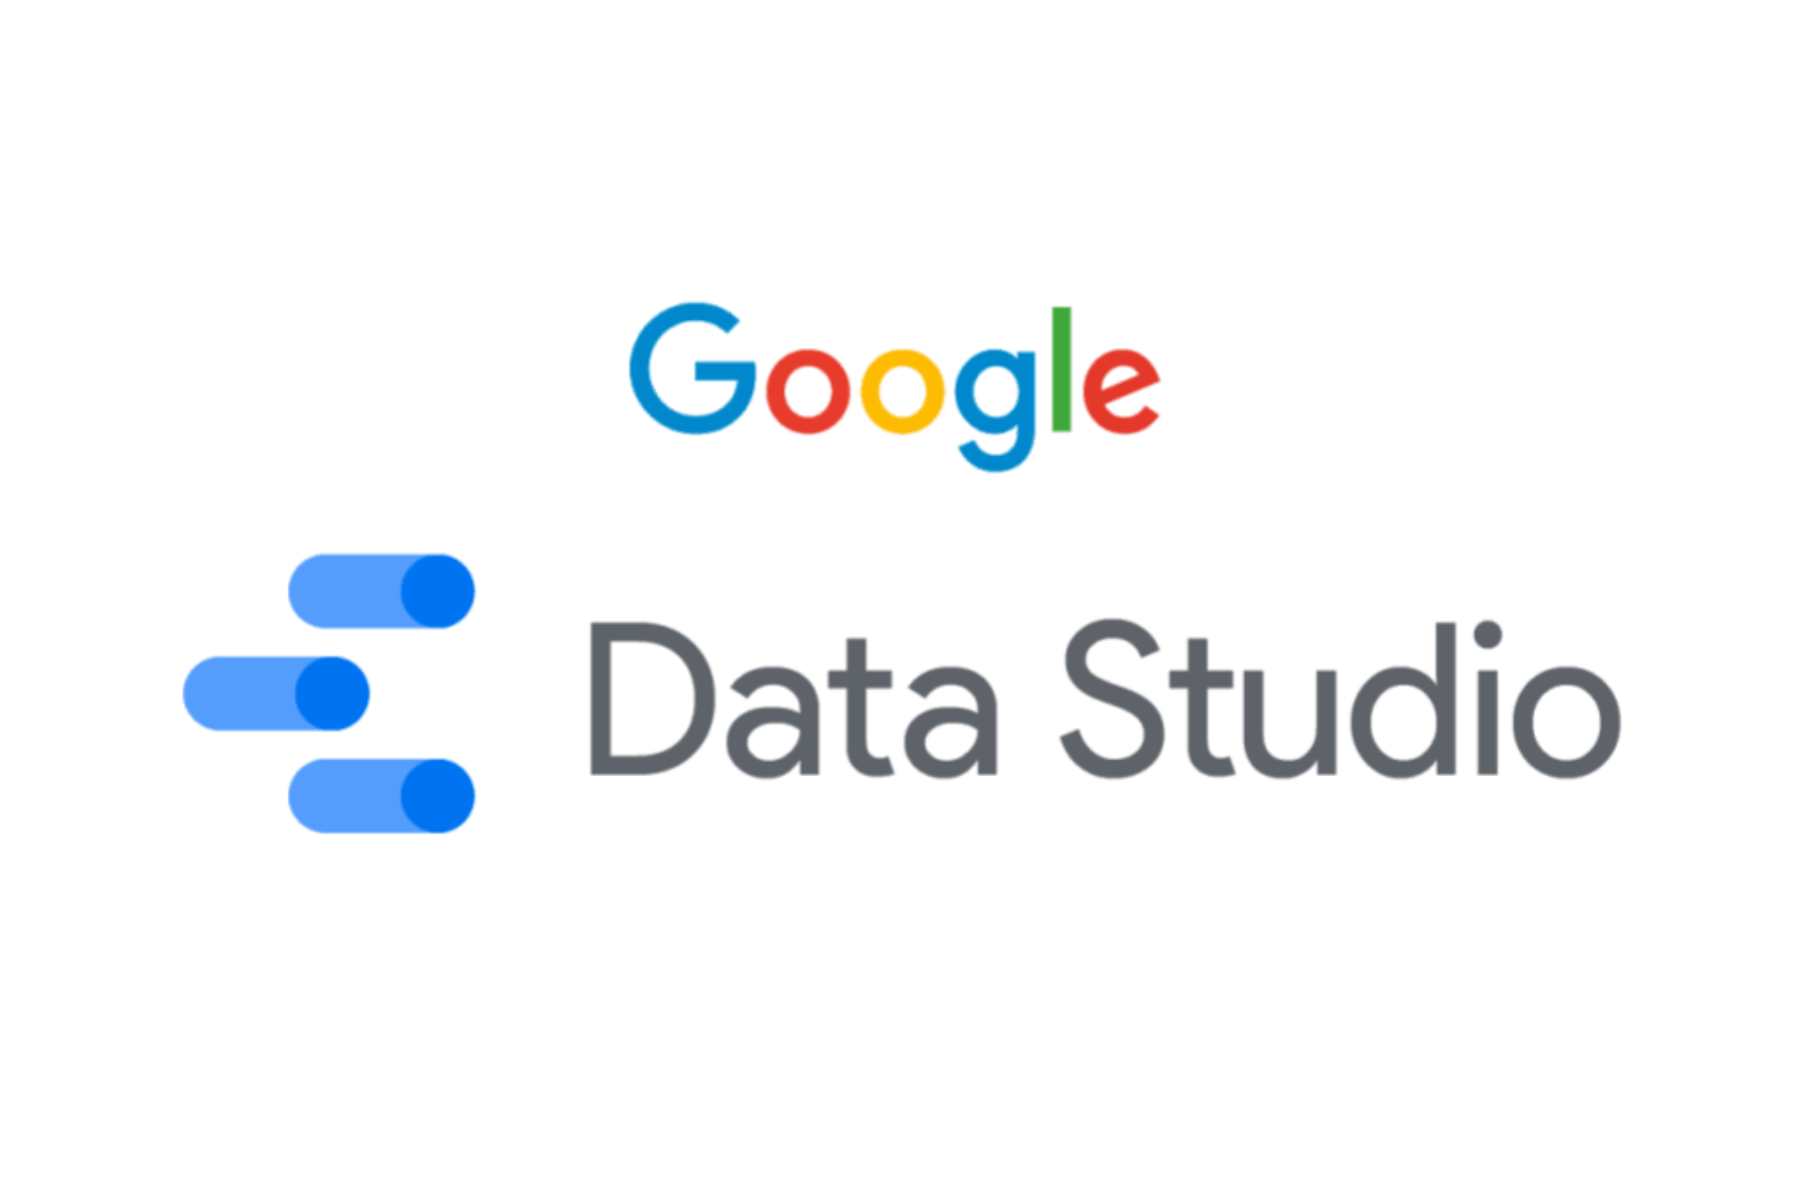 A logo of Google Data Studio